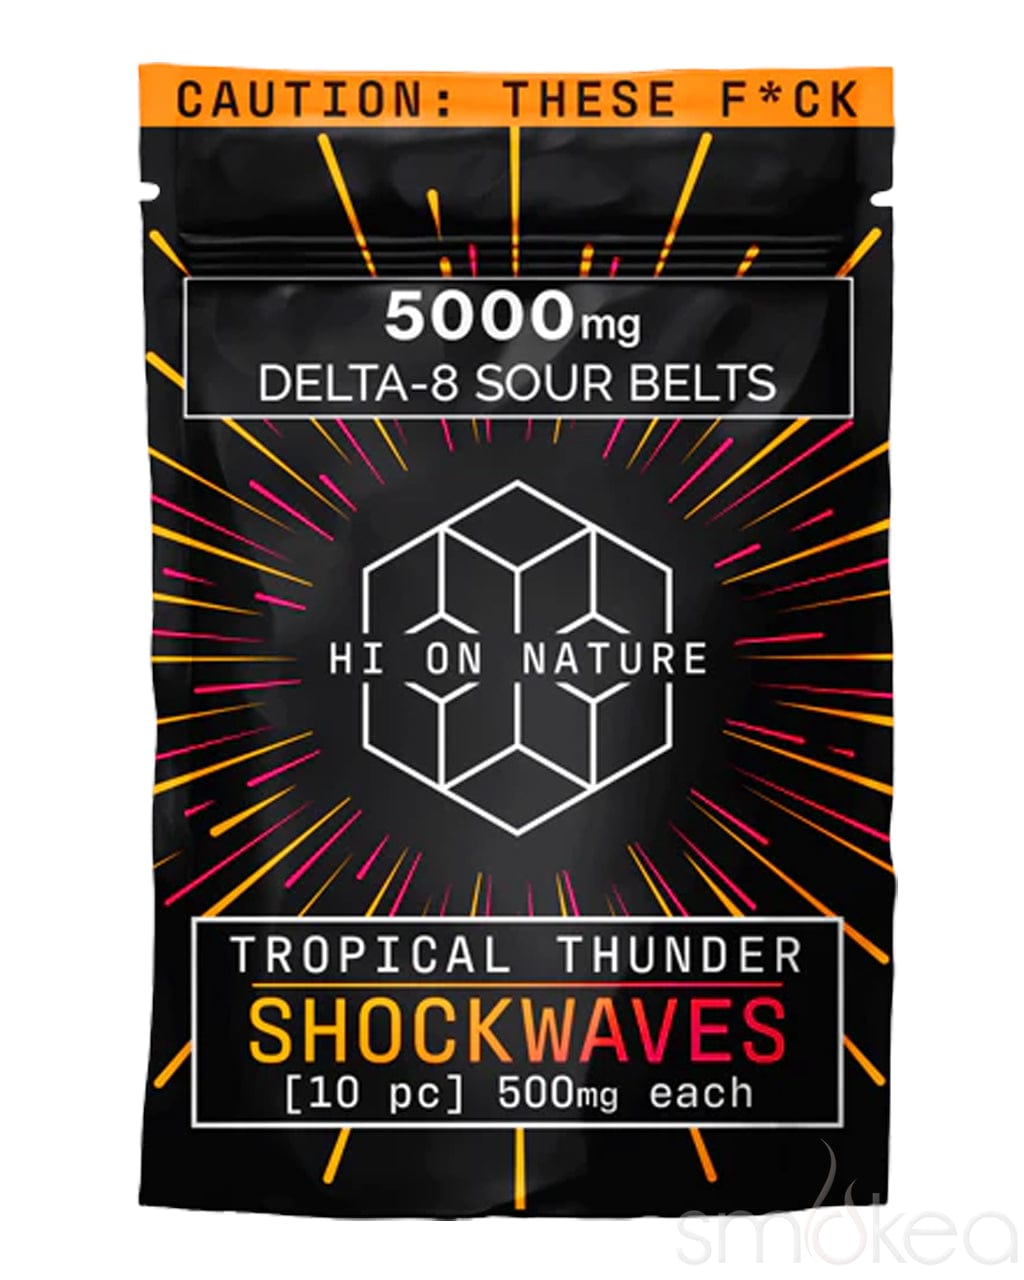 Hi On Nature 5000mg Delta 8 Shockwaves - Tropical Thunder